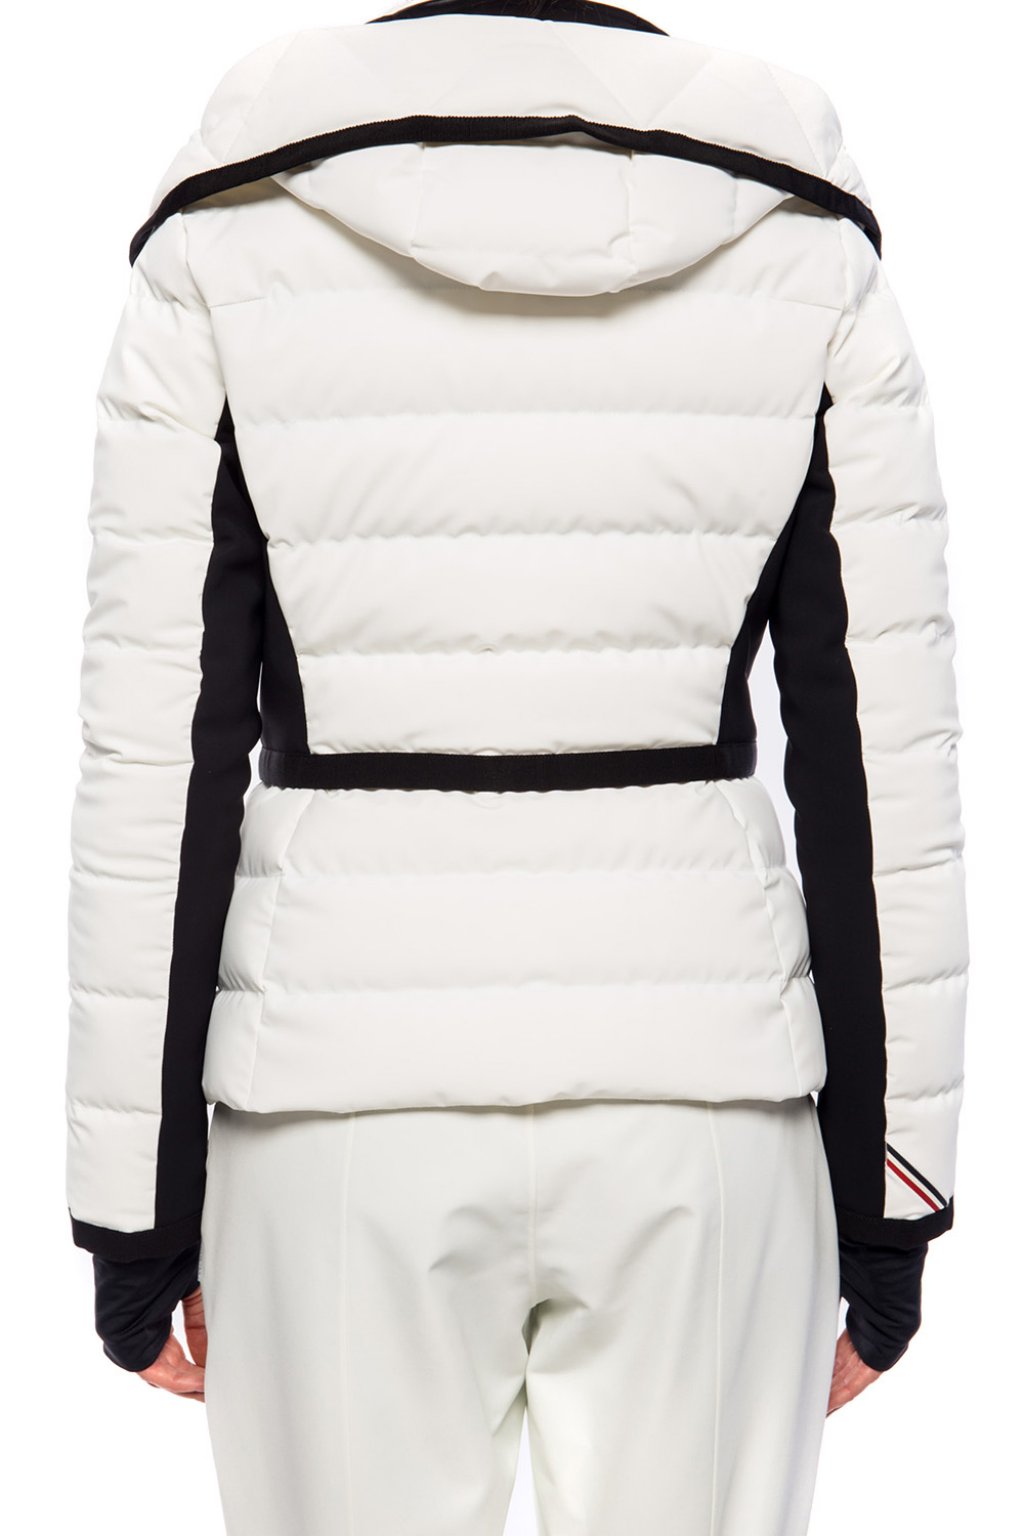 Lamoura' quilted jacket Moncler Grenoble - Vitkac US